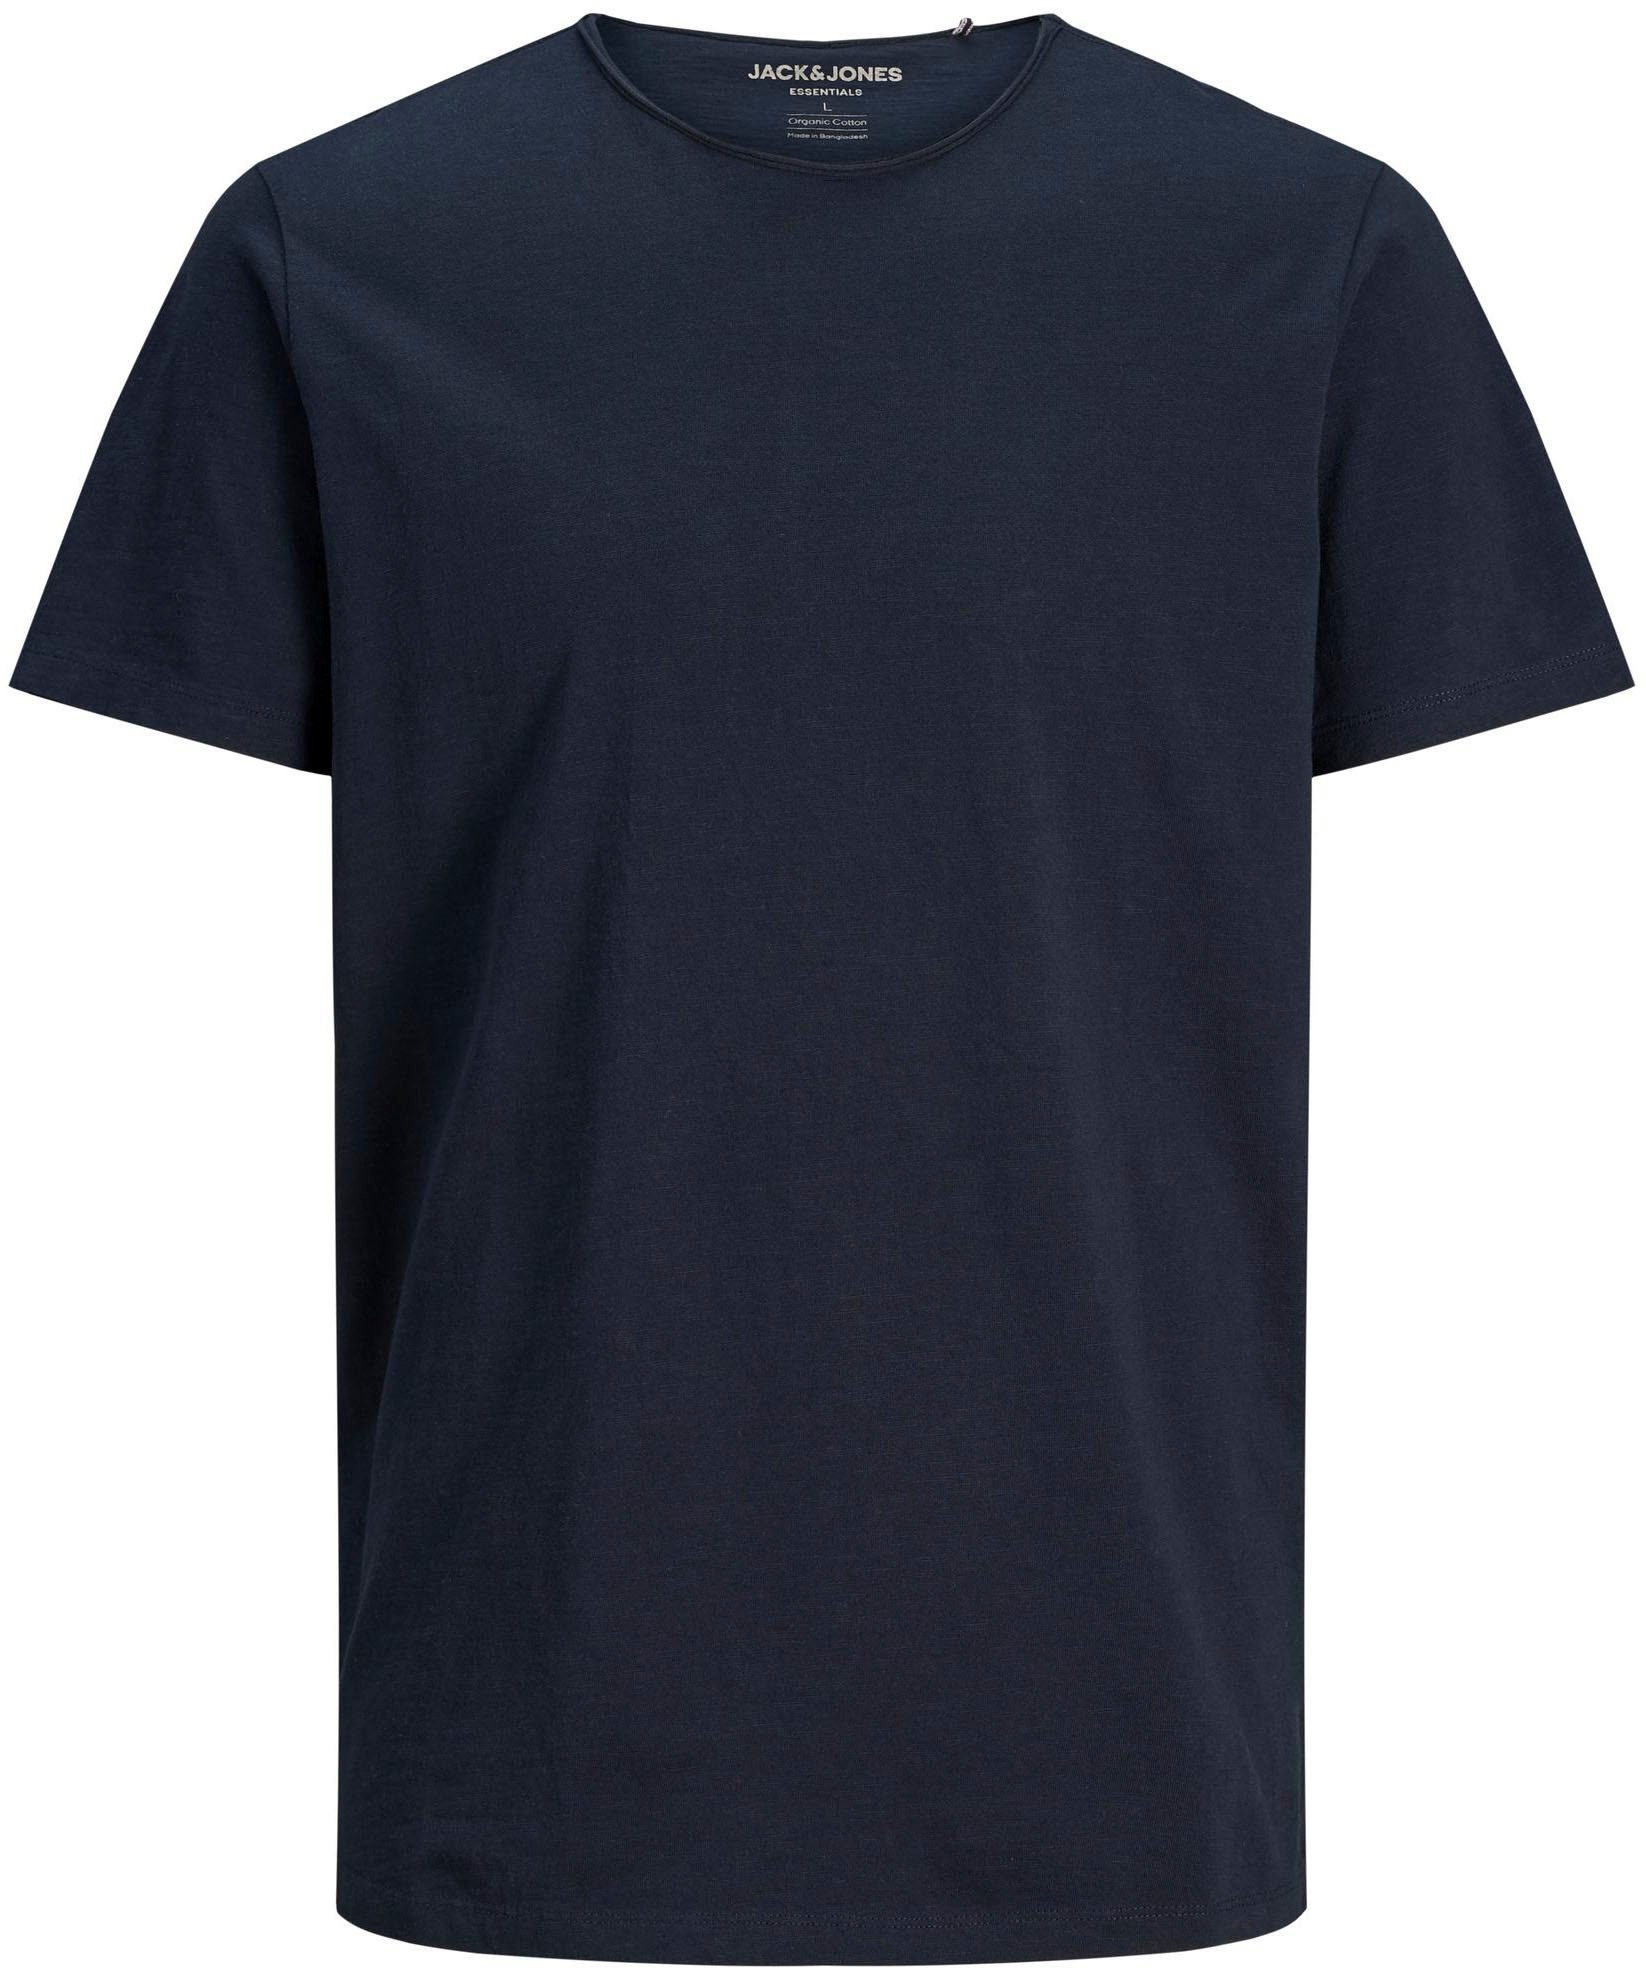 Jack Jones BASHER & Blazer Navy TEE T-Shirt